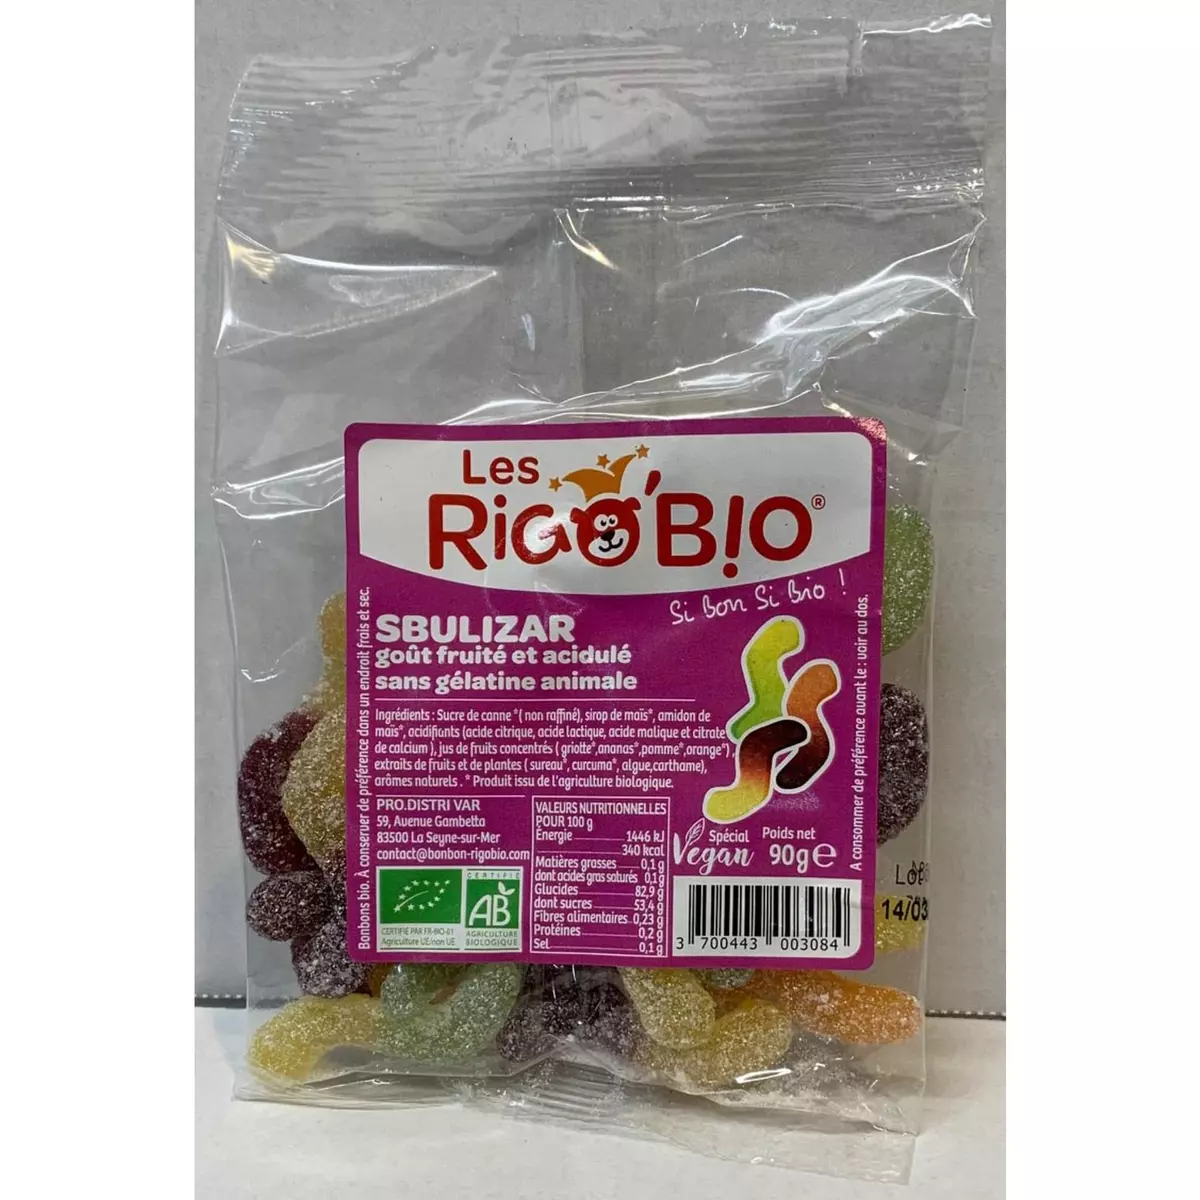 RIGOBIO Sbulizar bonbons vegan fruités et acidulés bio 90g pas cher 